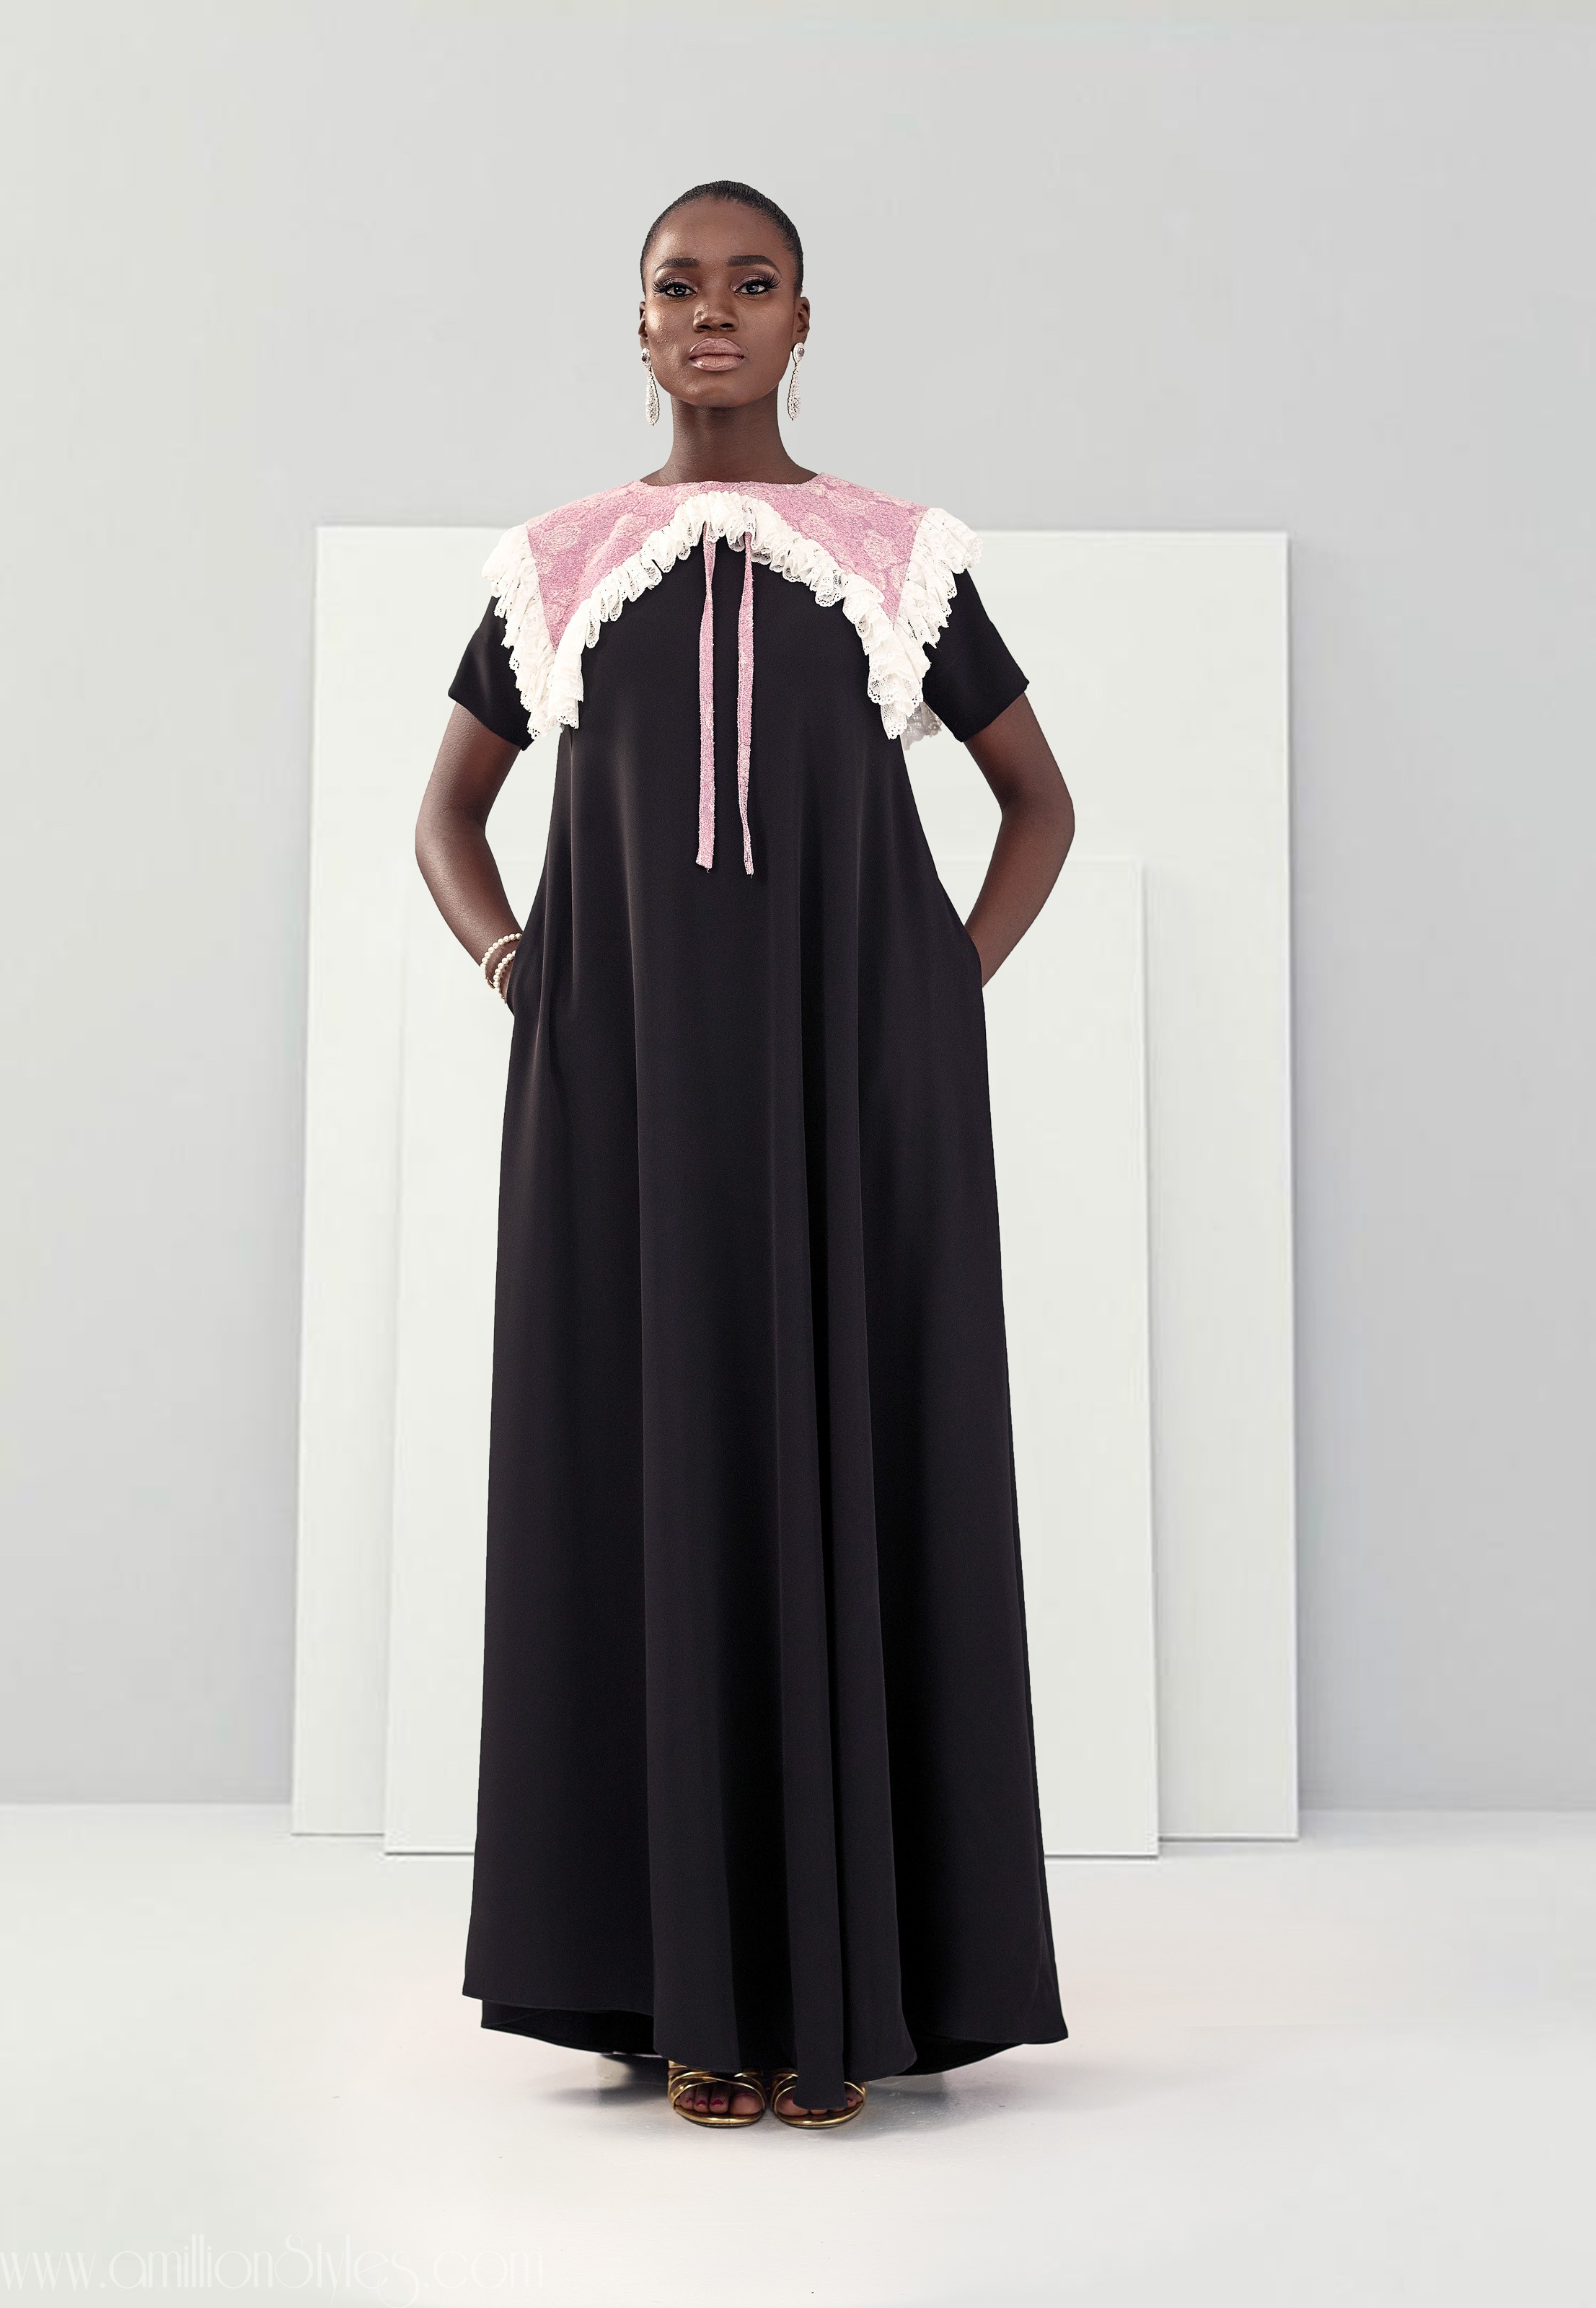 Nouva Couture Unveils "Undone Glamour"